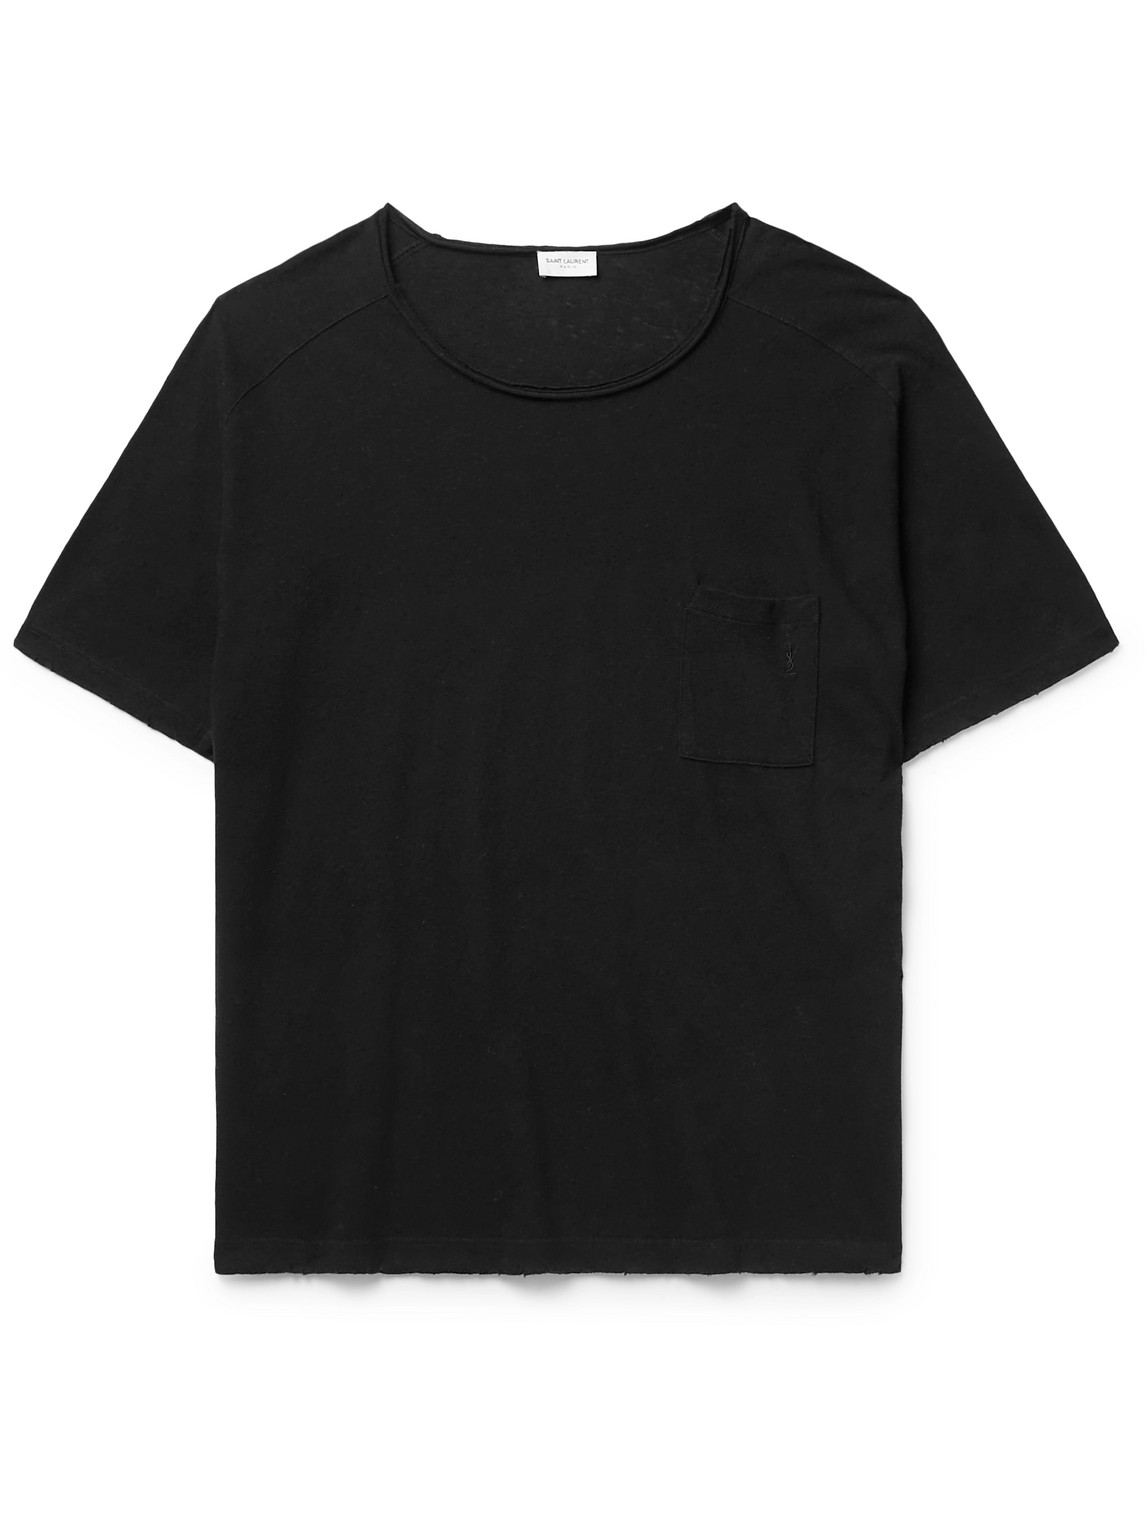 SAINT LAURENT Distressed Cotton and Linen-Blend Jersey T-Shirt